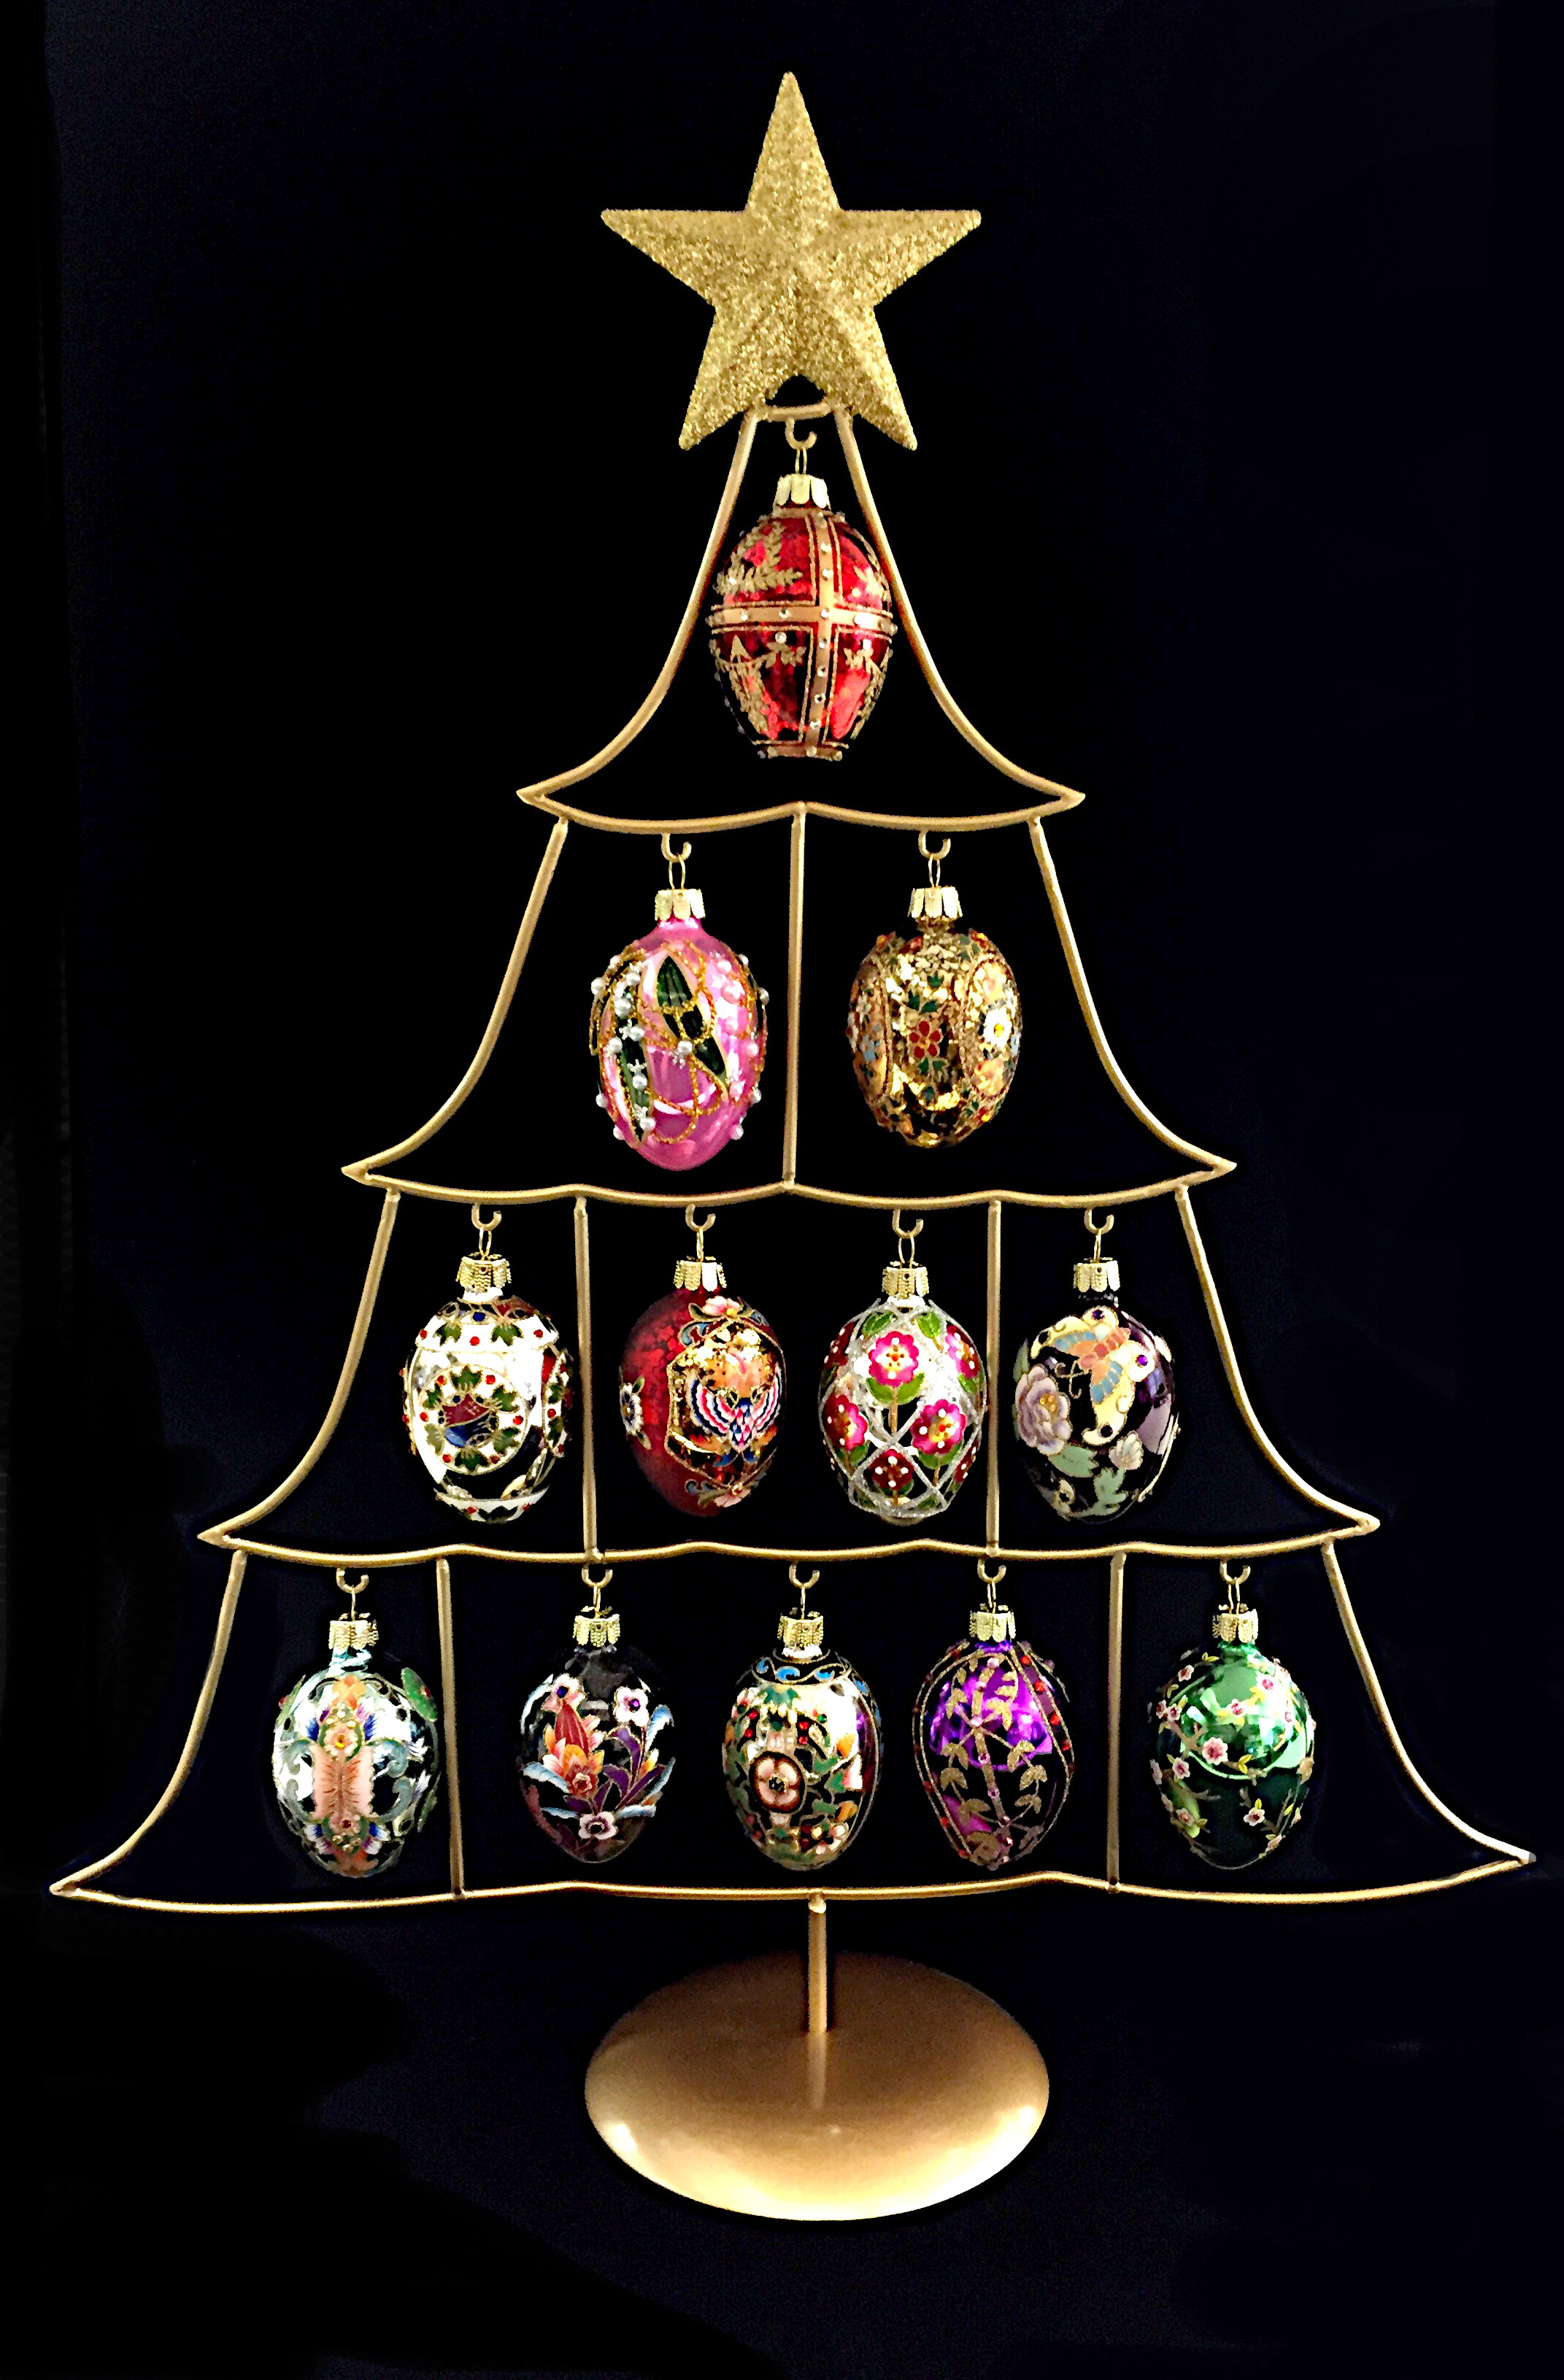 2016 Set of 12 Russian Inspired Mini Egg Ornaments - On Tree.jpg